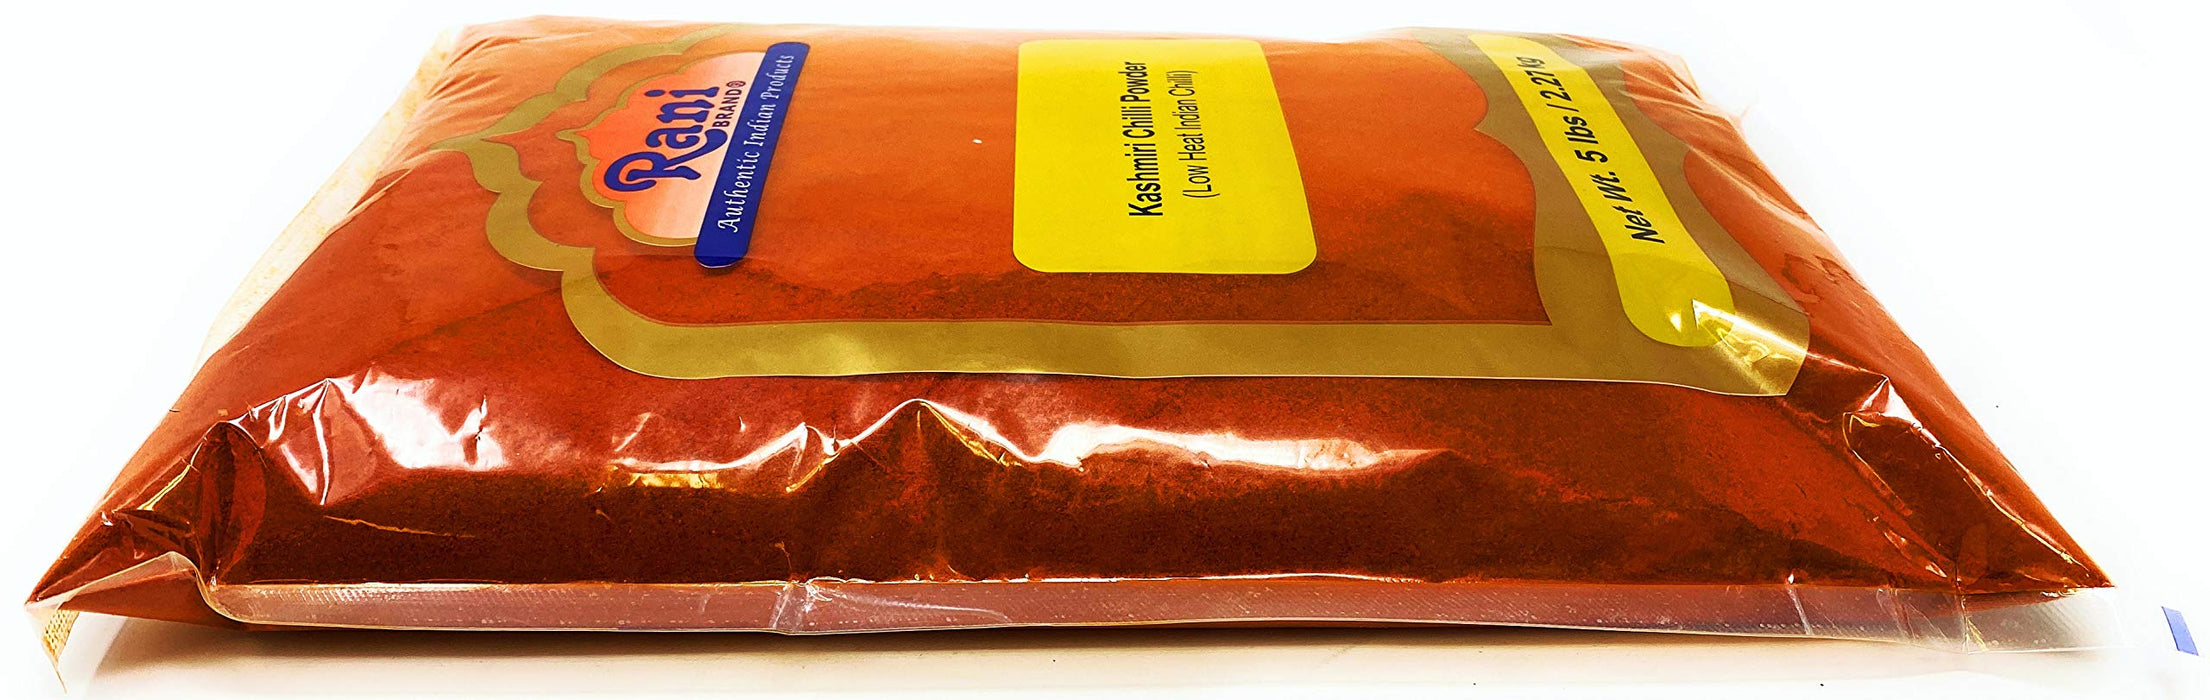 Rani Kashmiri Chilli Powder (Deggi Mirch, Low Heat) Ground Indian Spice 80oz (5lbs) 2.27kg ~ Natural | Salt-Free | Vegan | Gluten Friendly | Perfect for Deviled Eggs & Other Low Heat Dishes